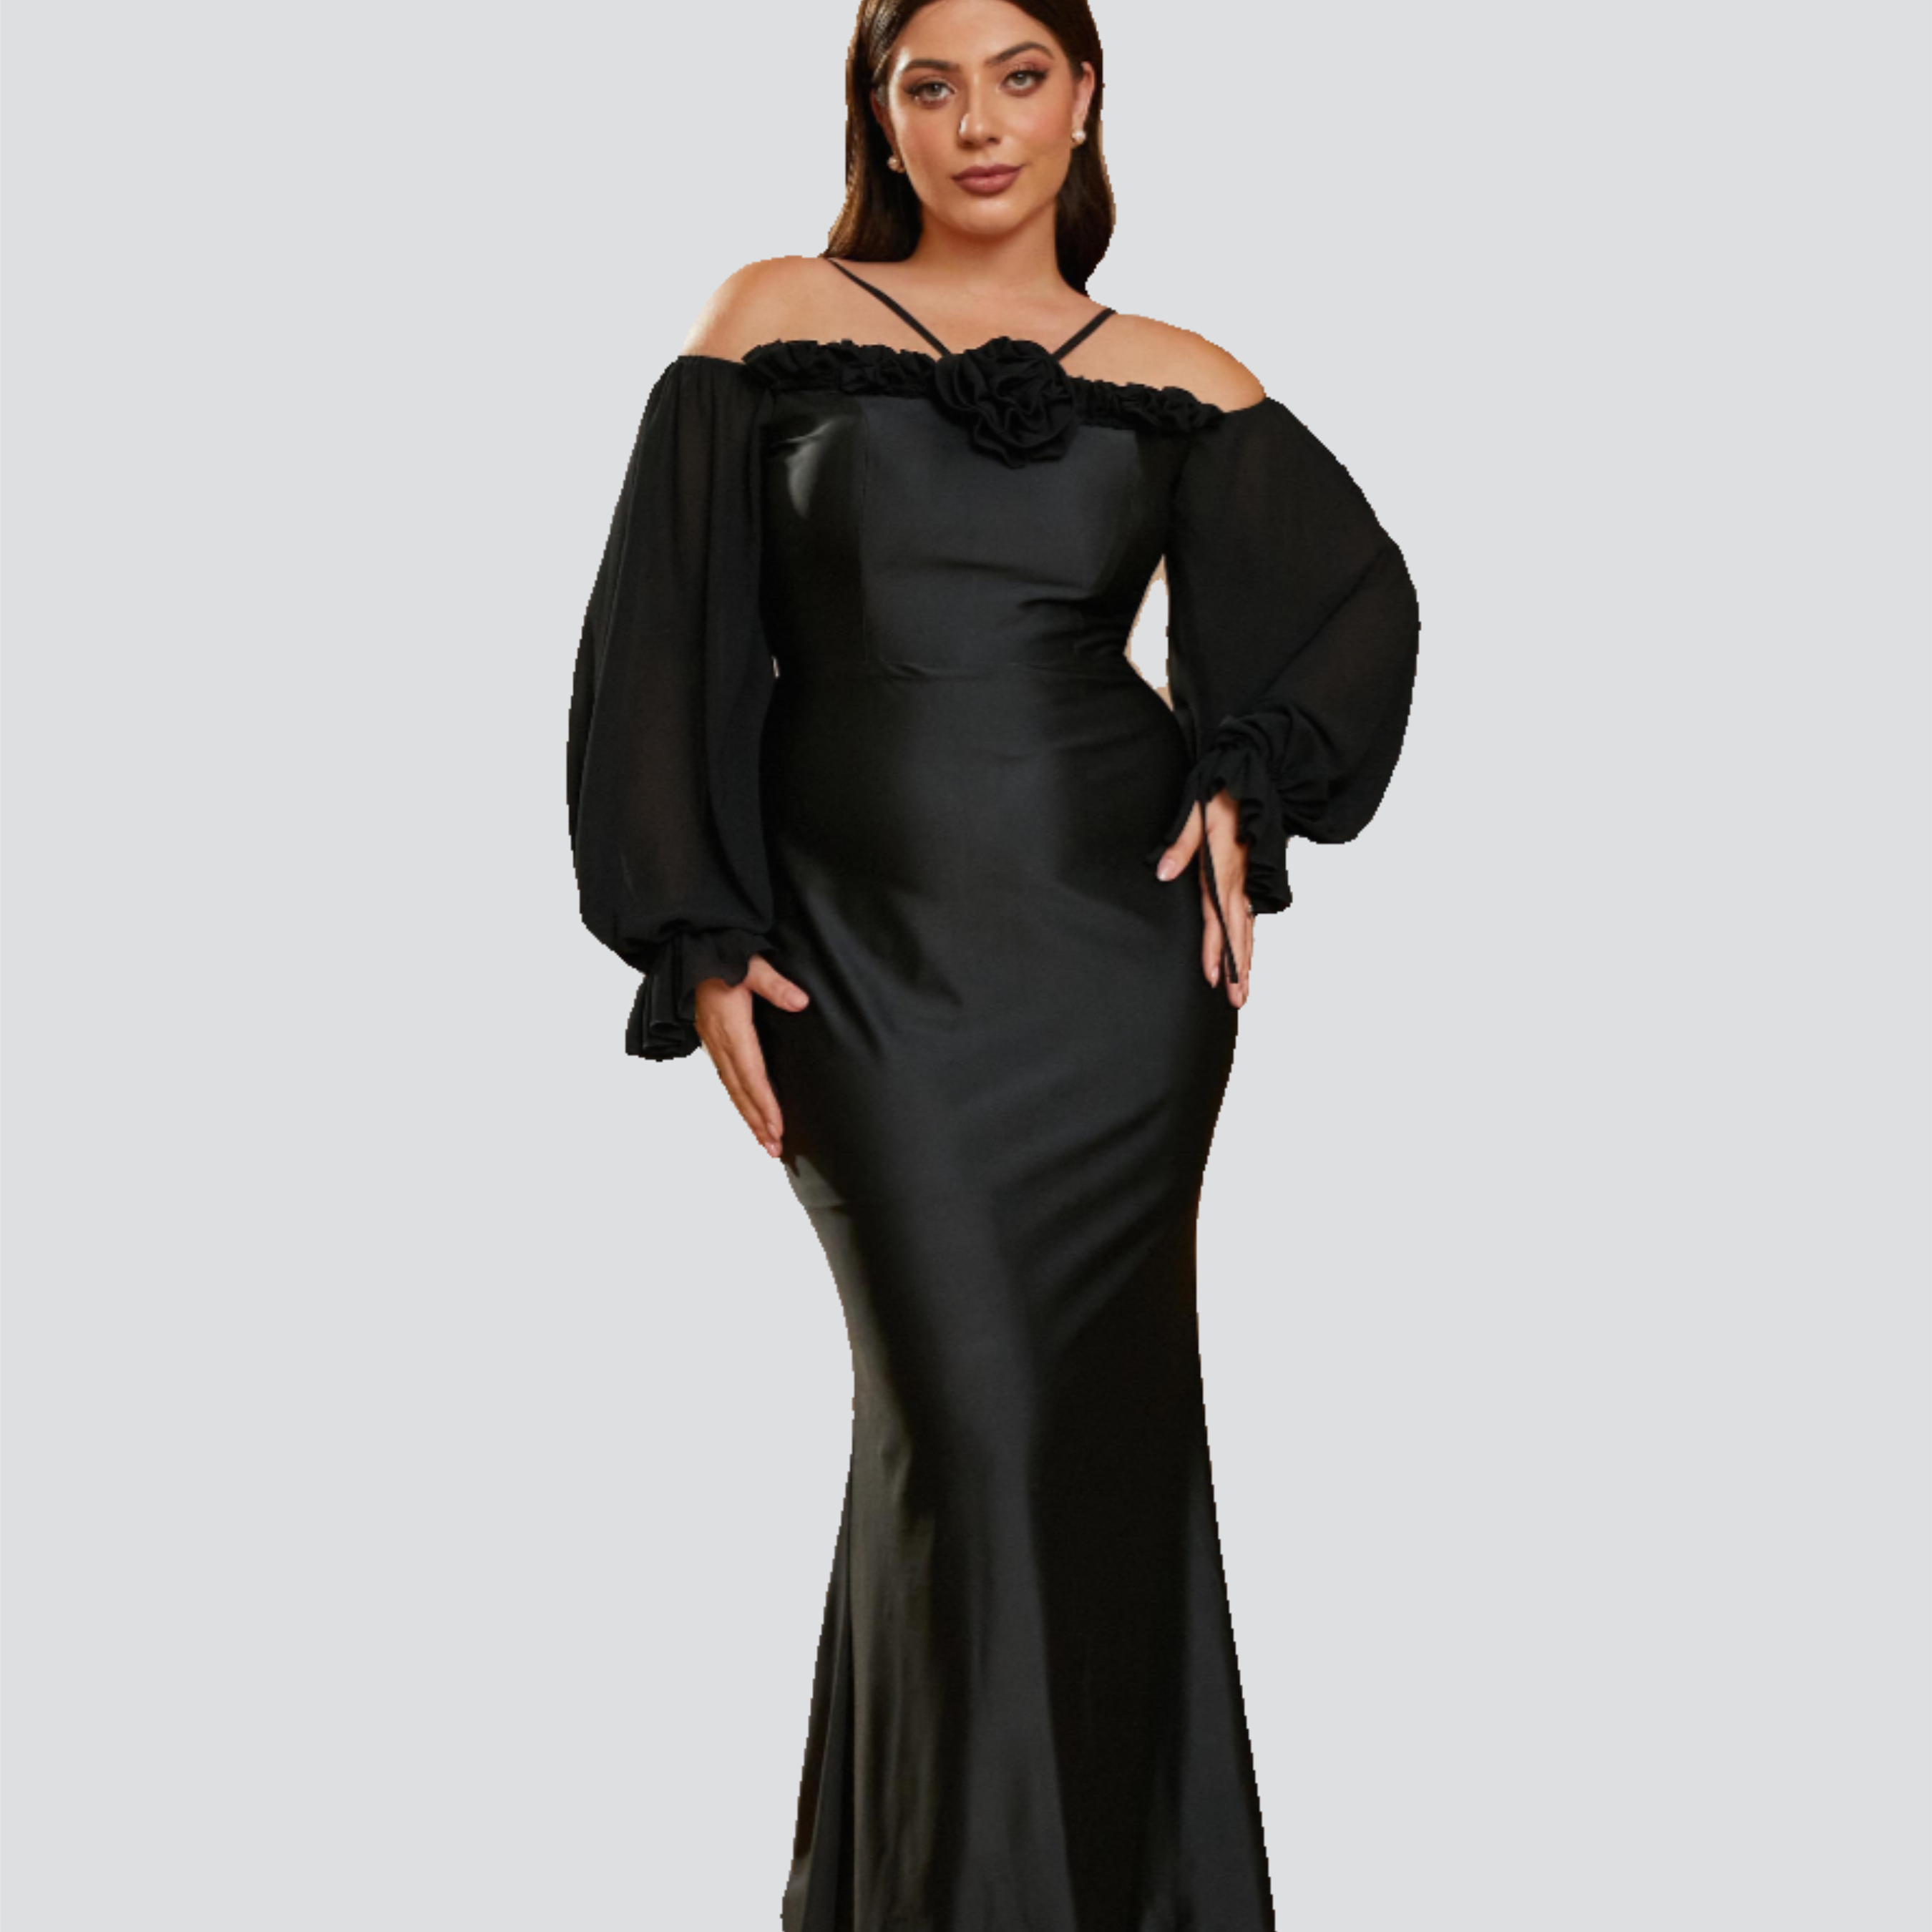 Plus Size Halter Appliqued Panel Black Prom Dress PRJ10954